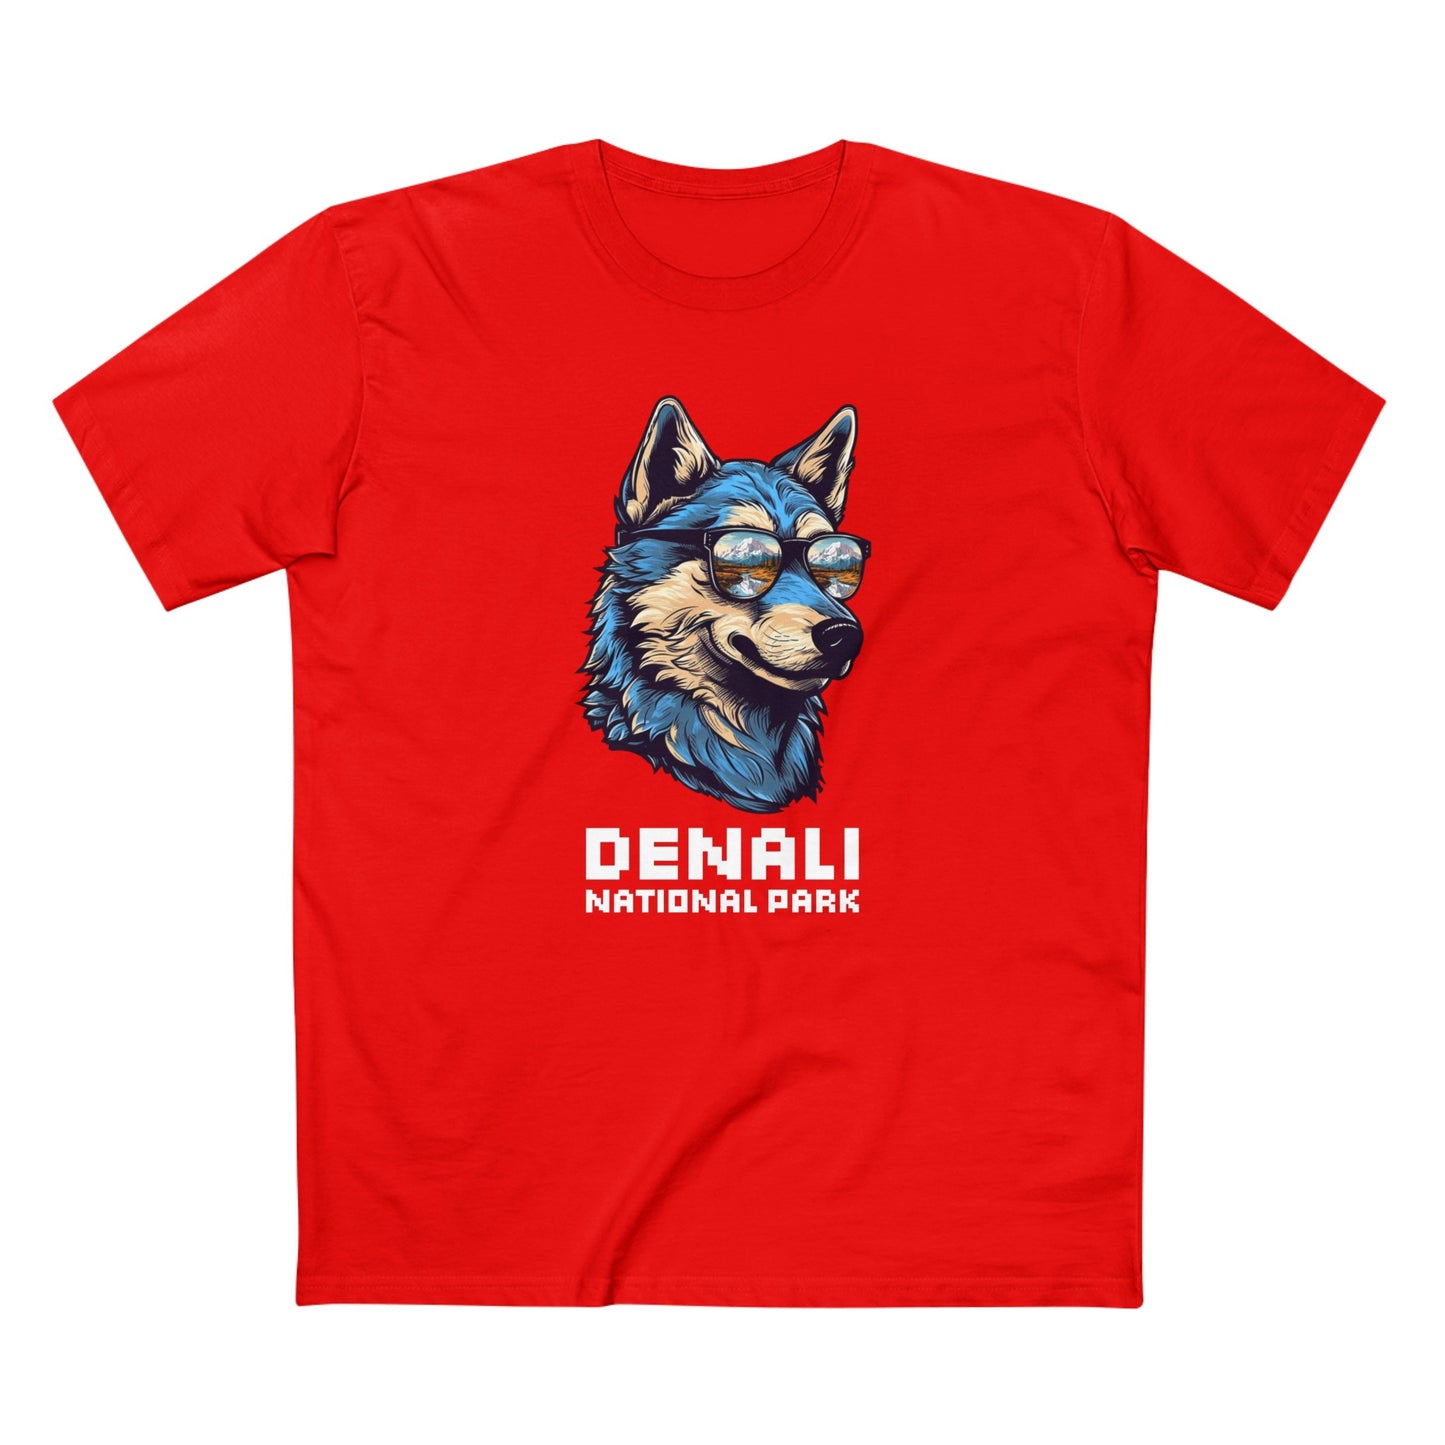 Denali National Park T-Shirt - Smooth Wolf